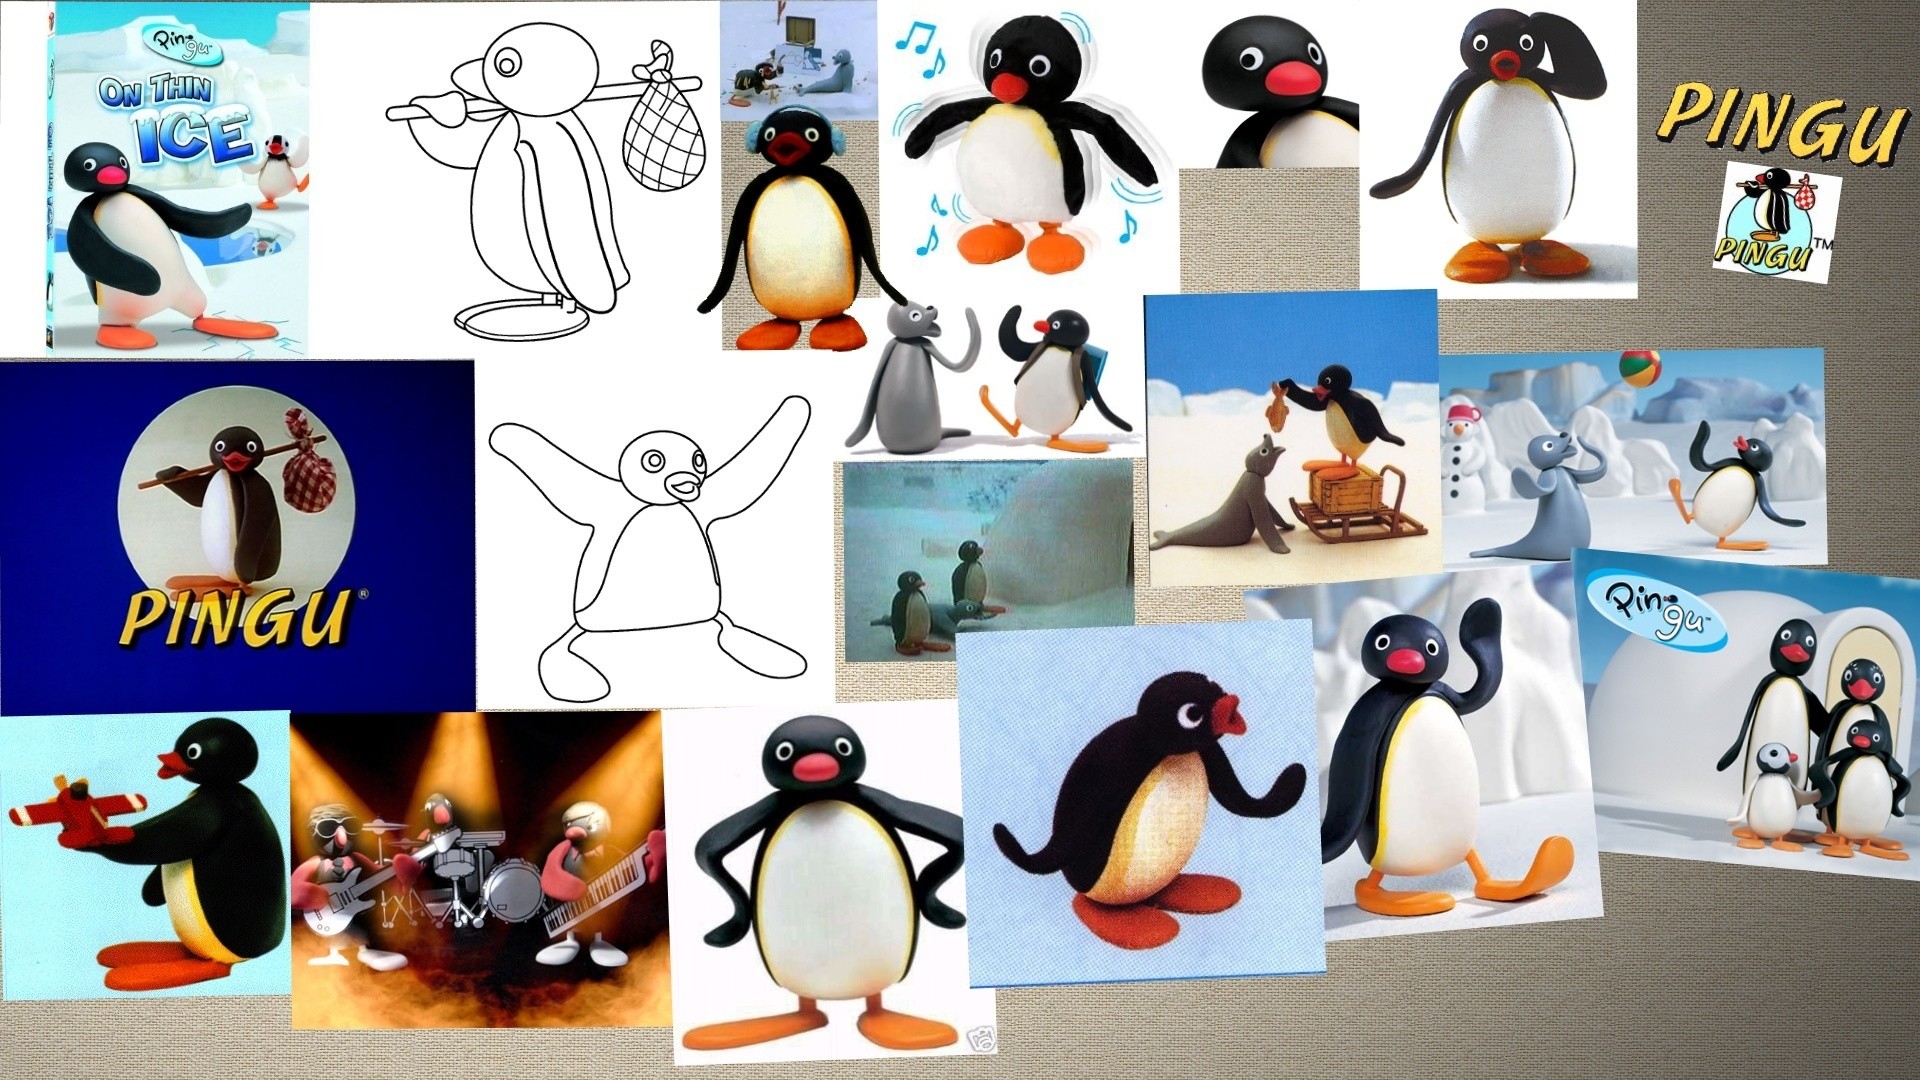 1920x1080 Pingu images Pingu Fans Wallpaper HD wallpaper and background photos